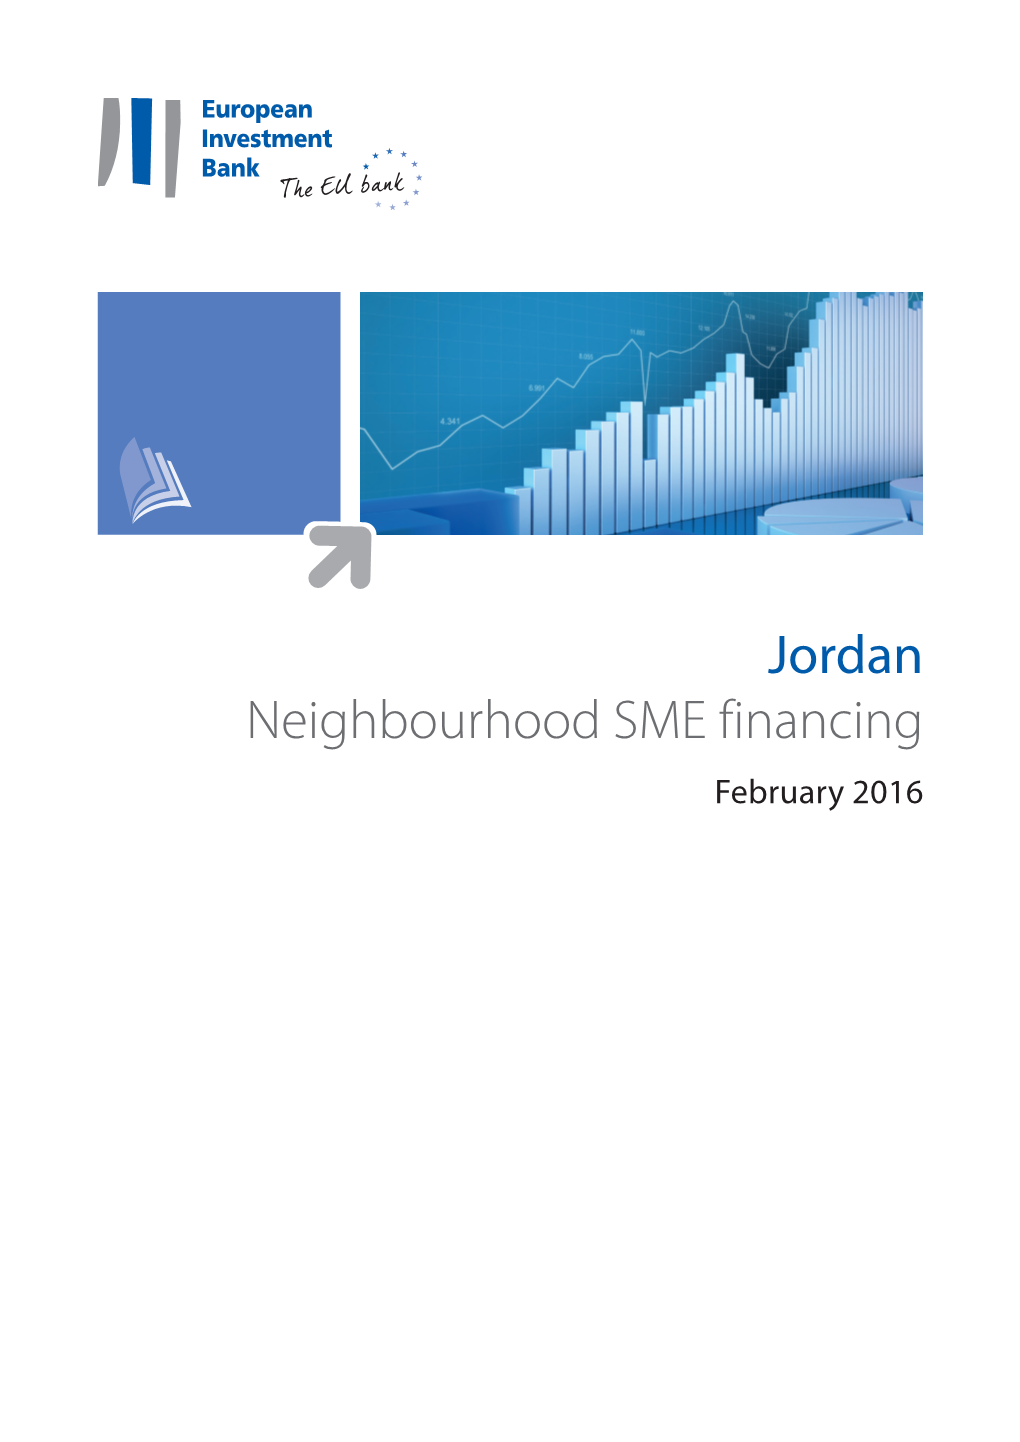 Jordan: Neighbourhood SME Financing